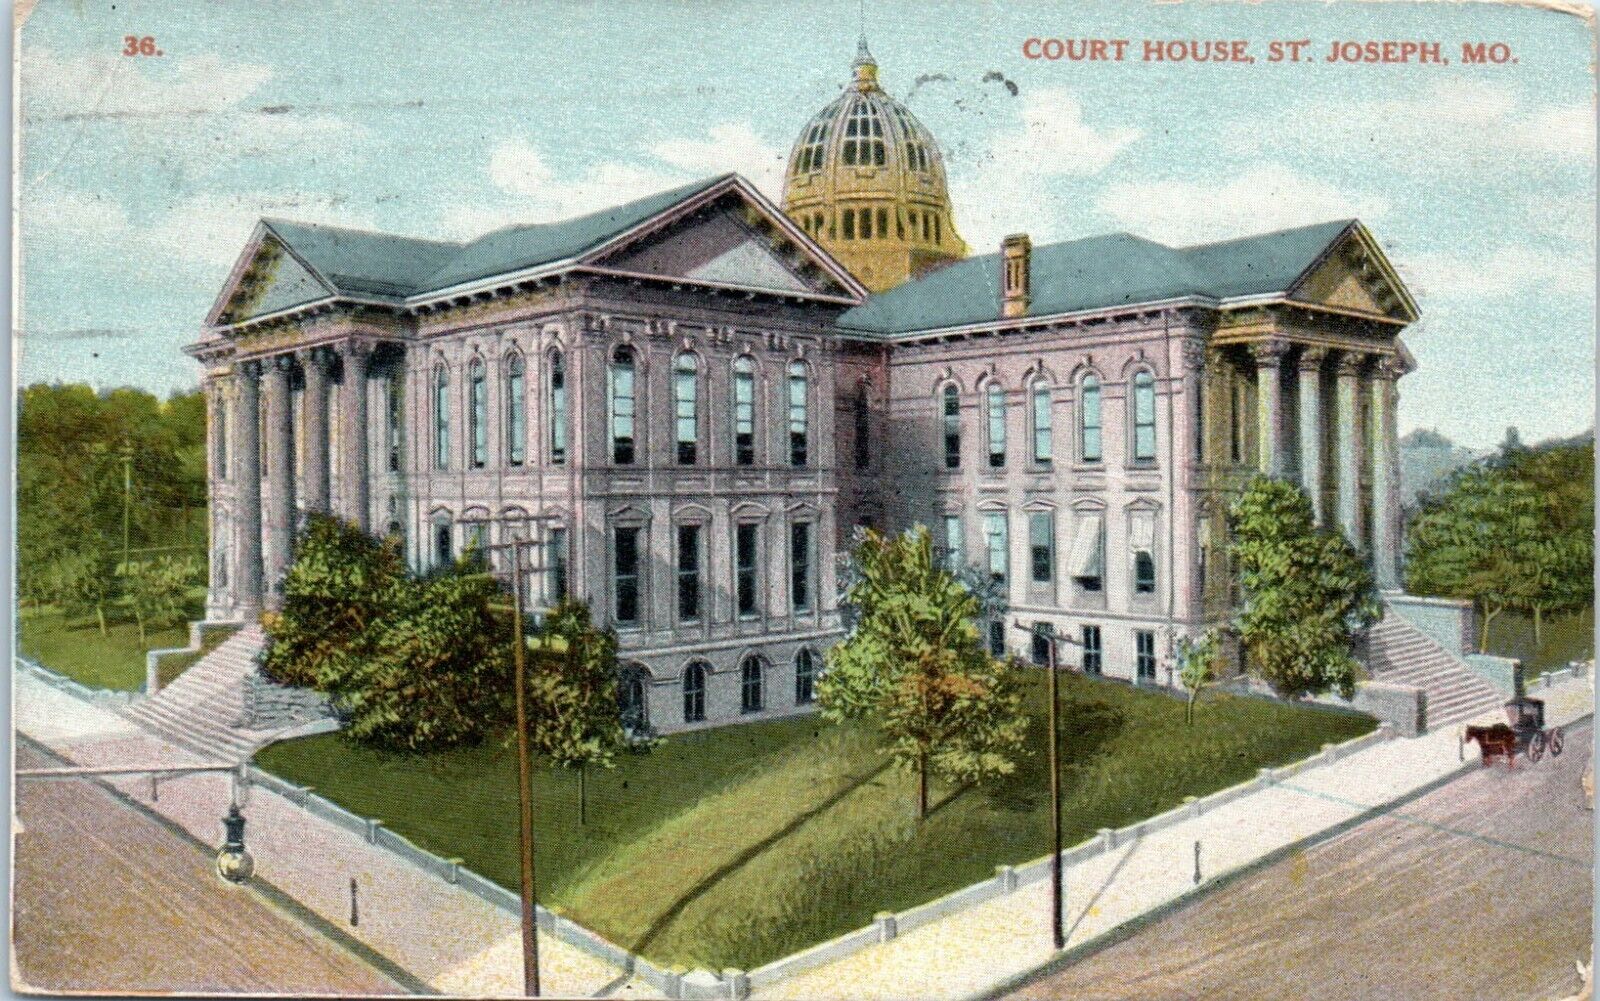 Court House, Horse and Carriage on Street, St. Joseph, Missouri Postcard c1912